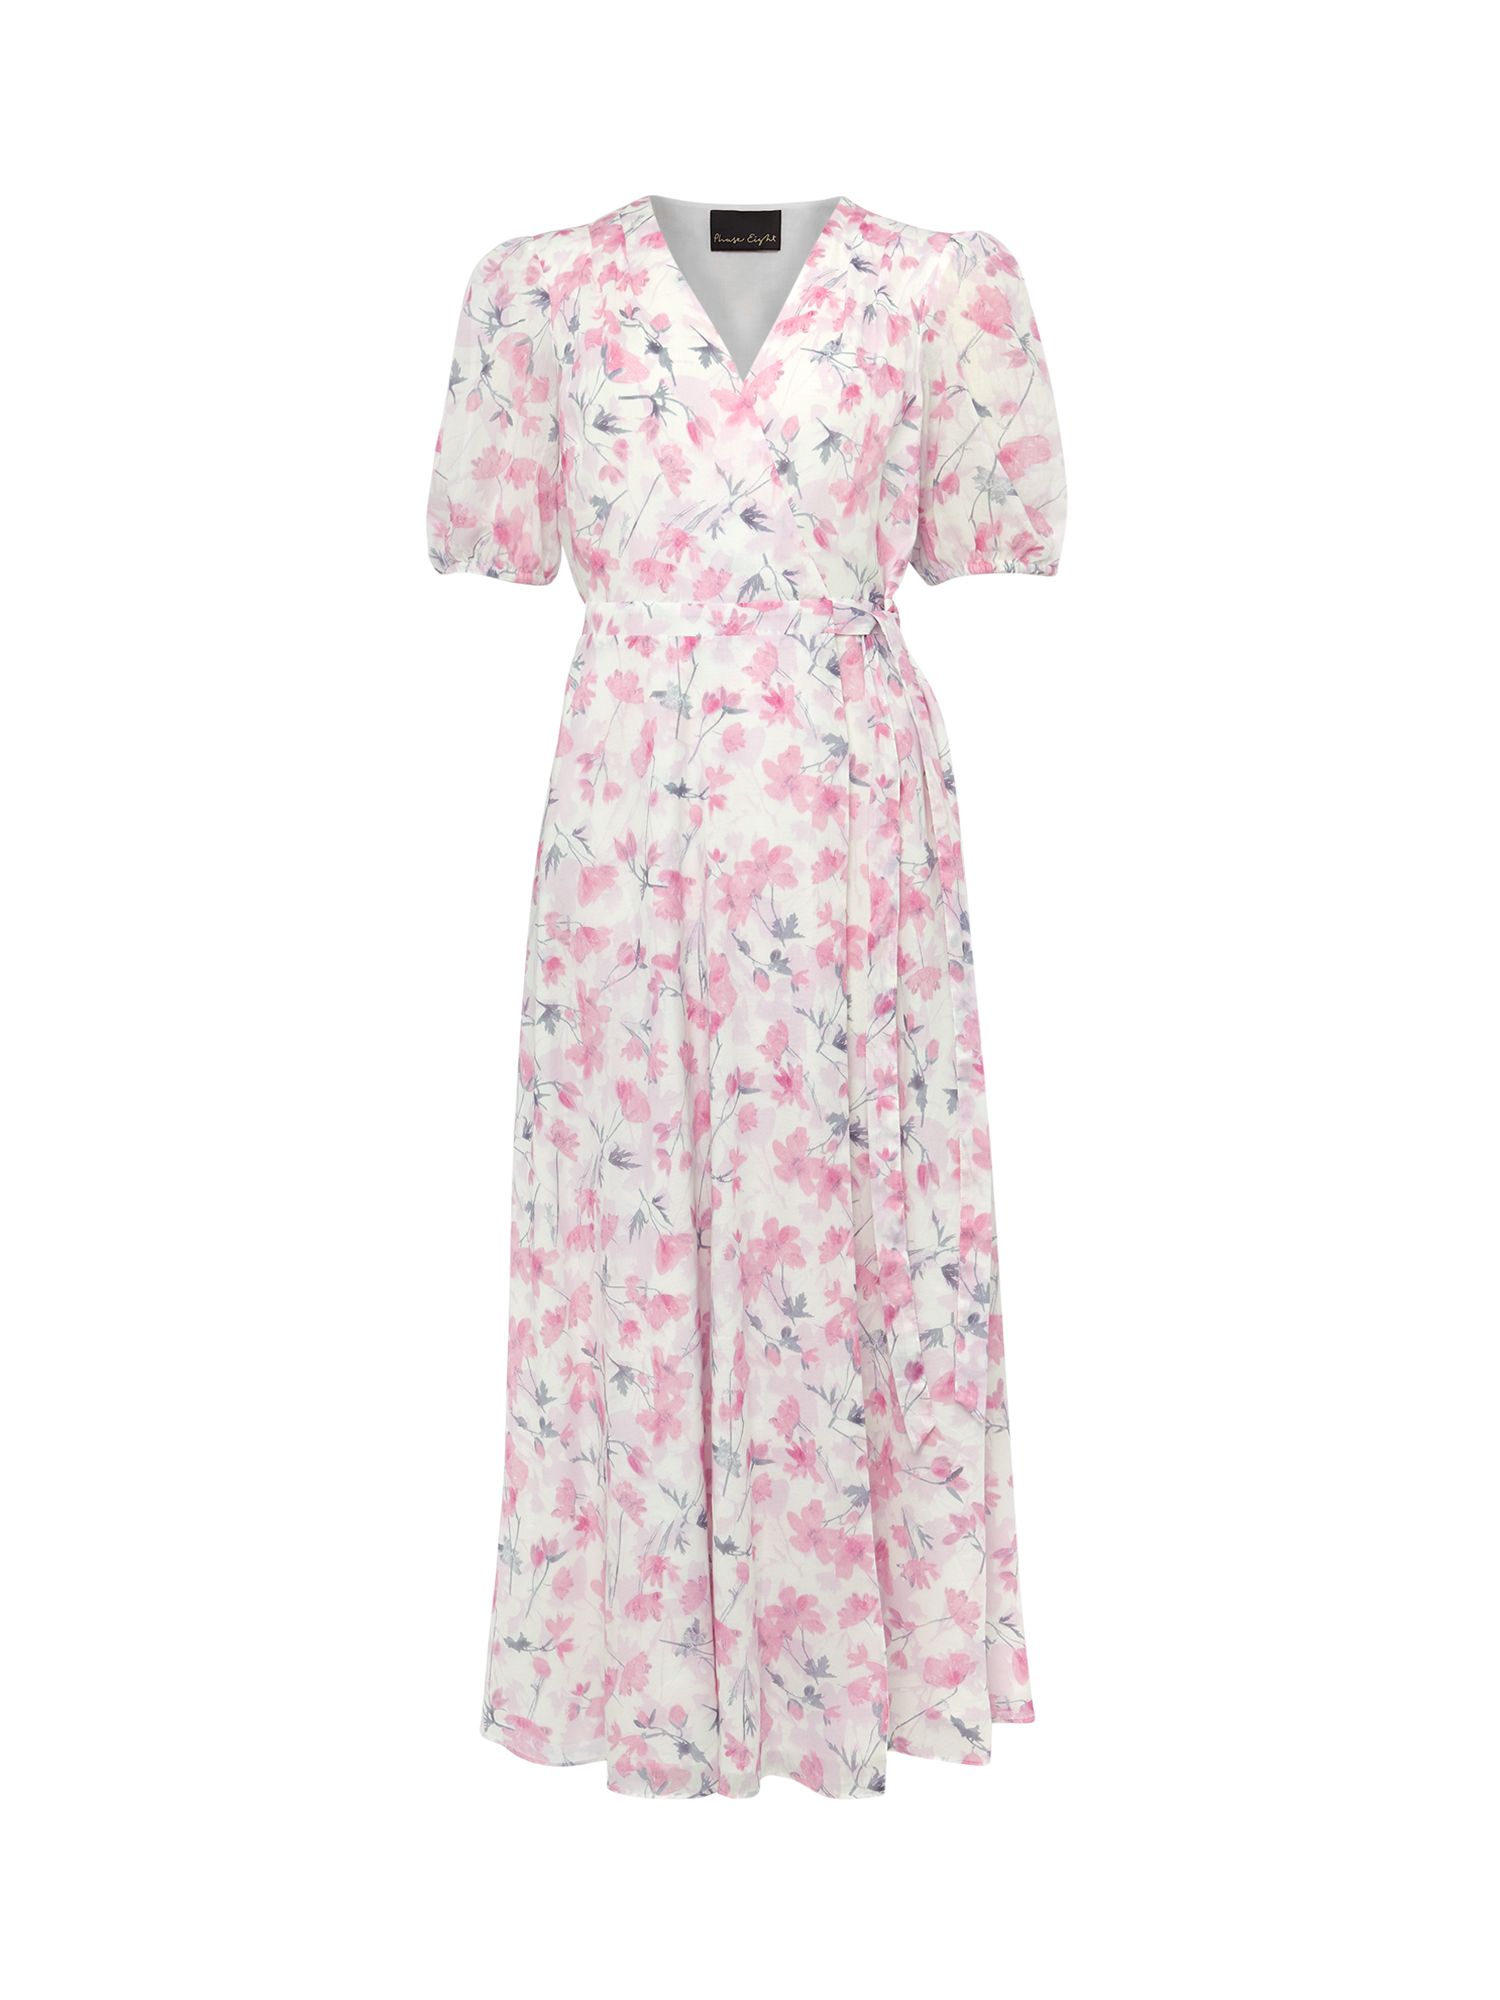 Phase Eight Gabriella Floral Midi Dress, Pink/Multi, 8